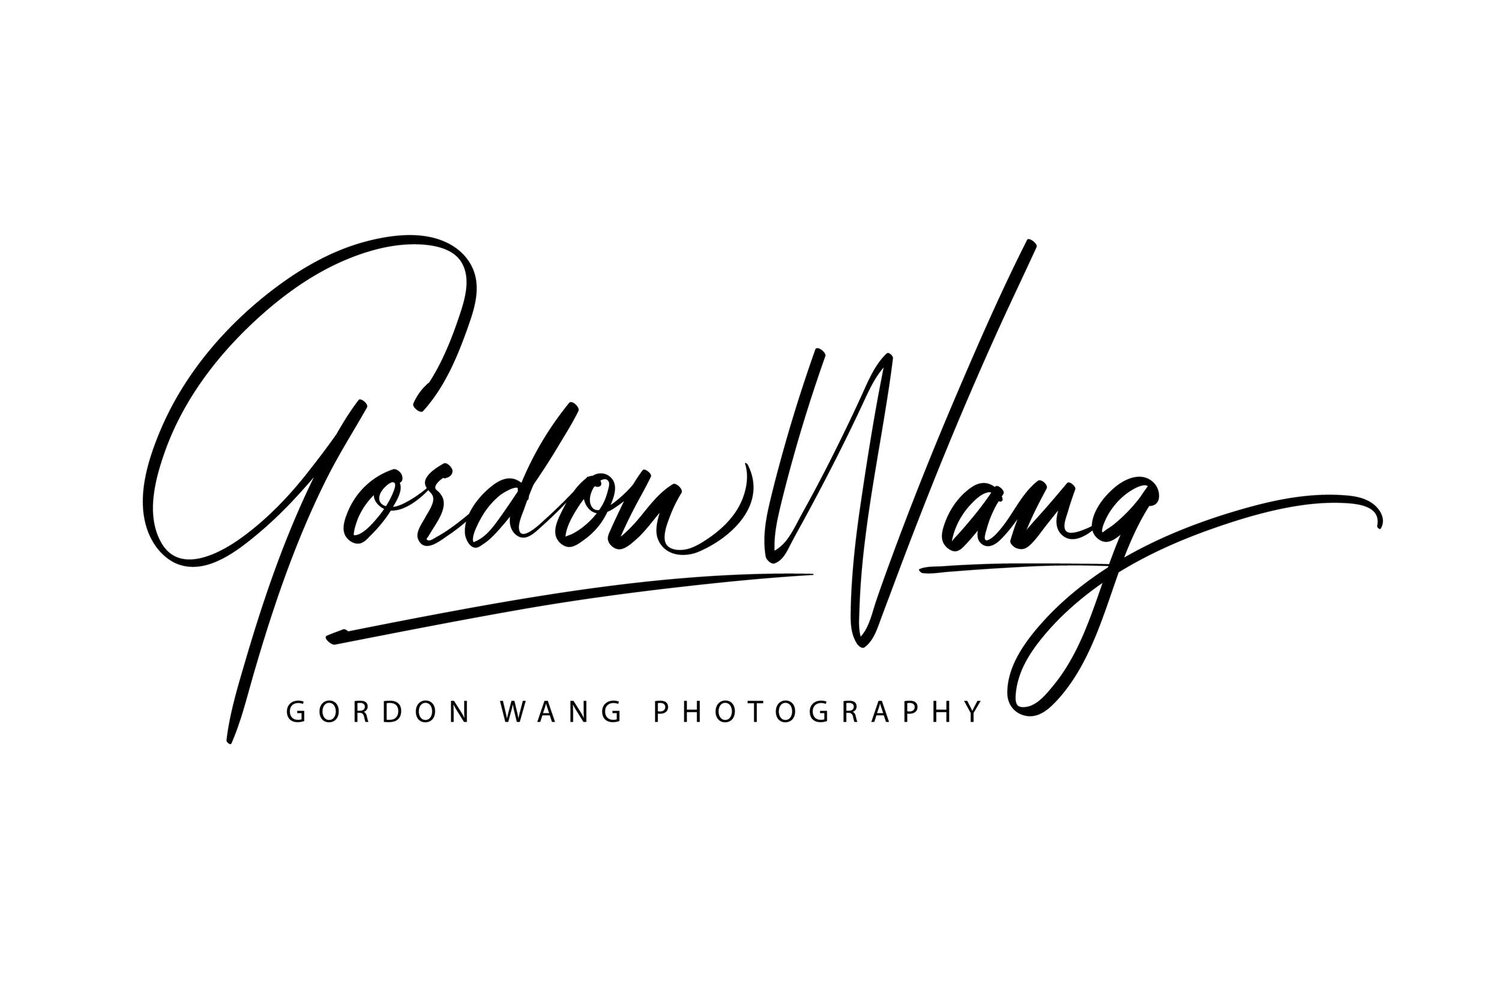 www.gordonwang.com